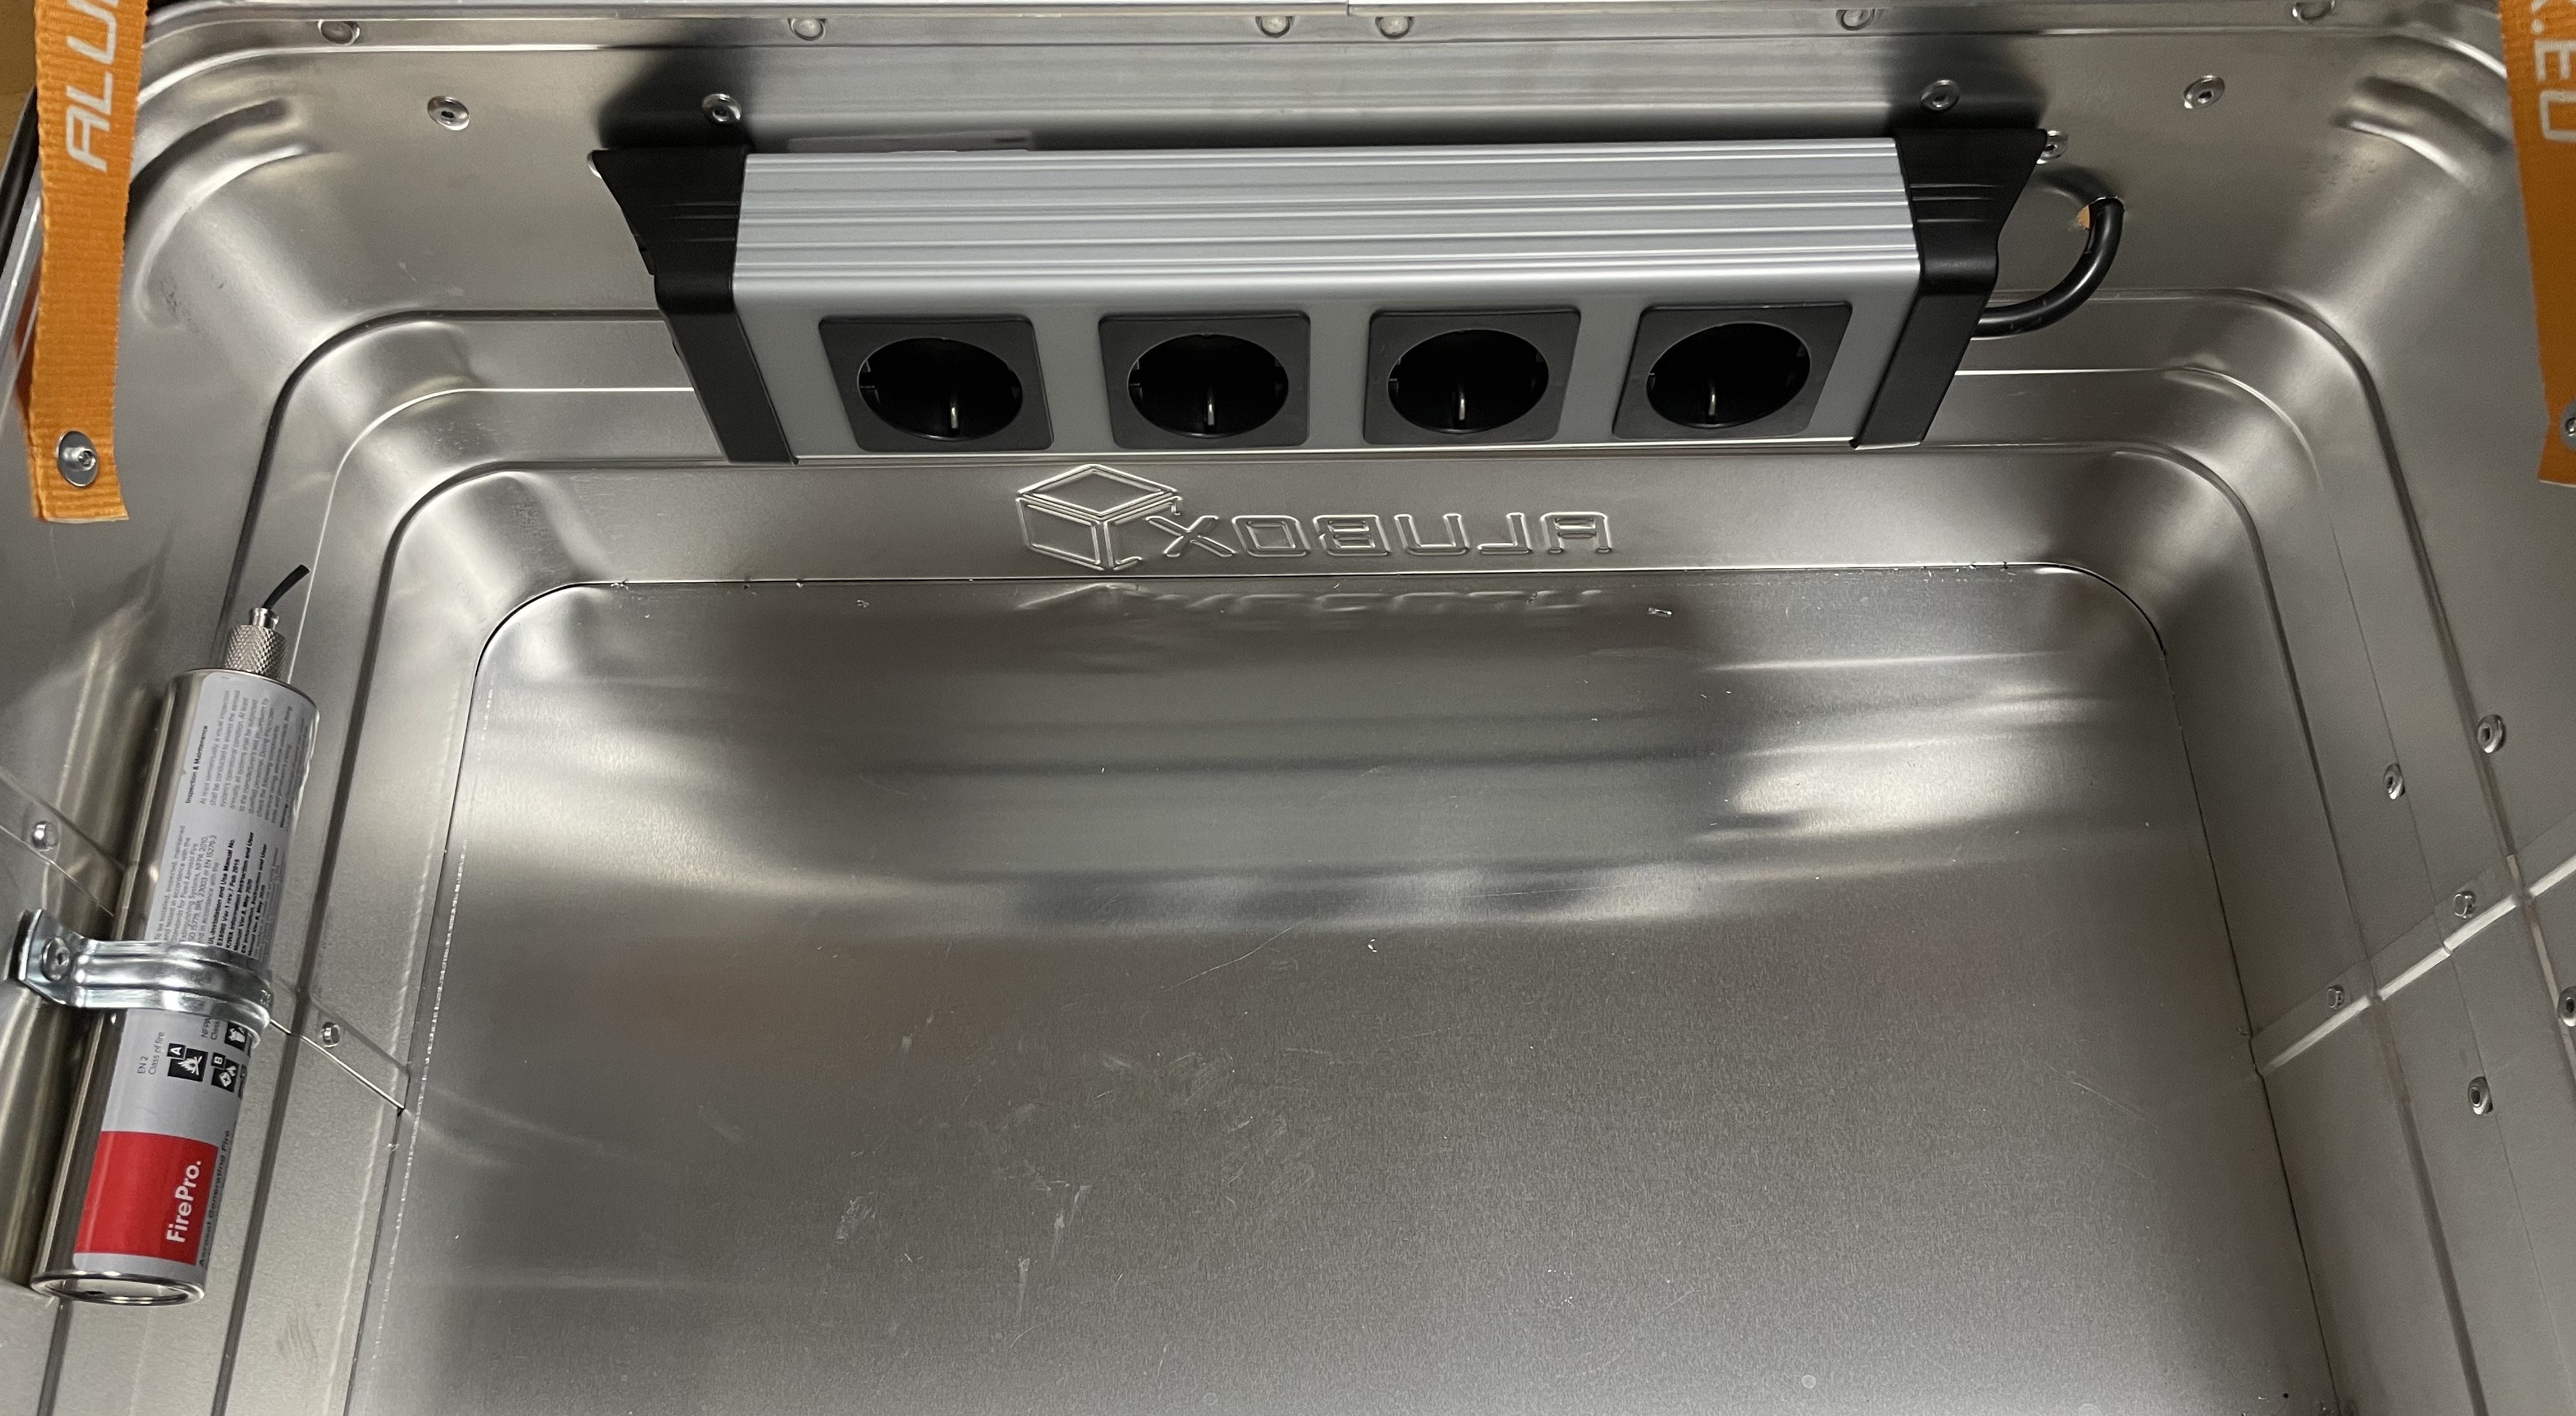 FireStop AluBox S29